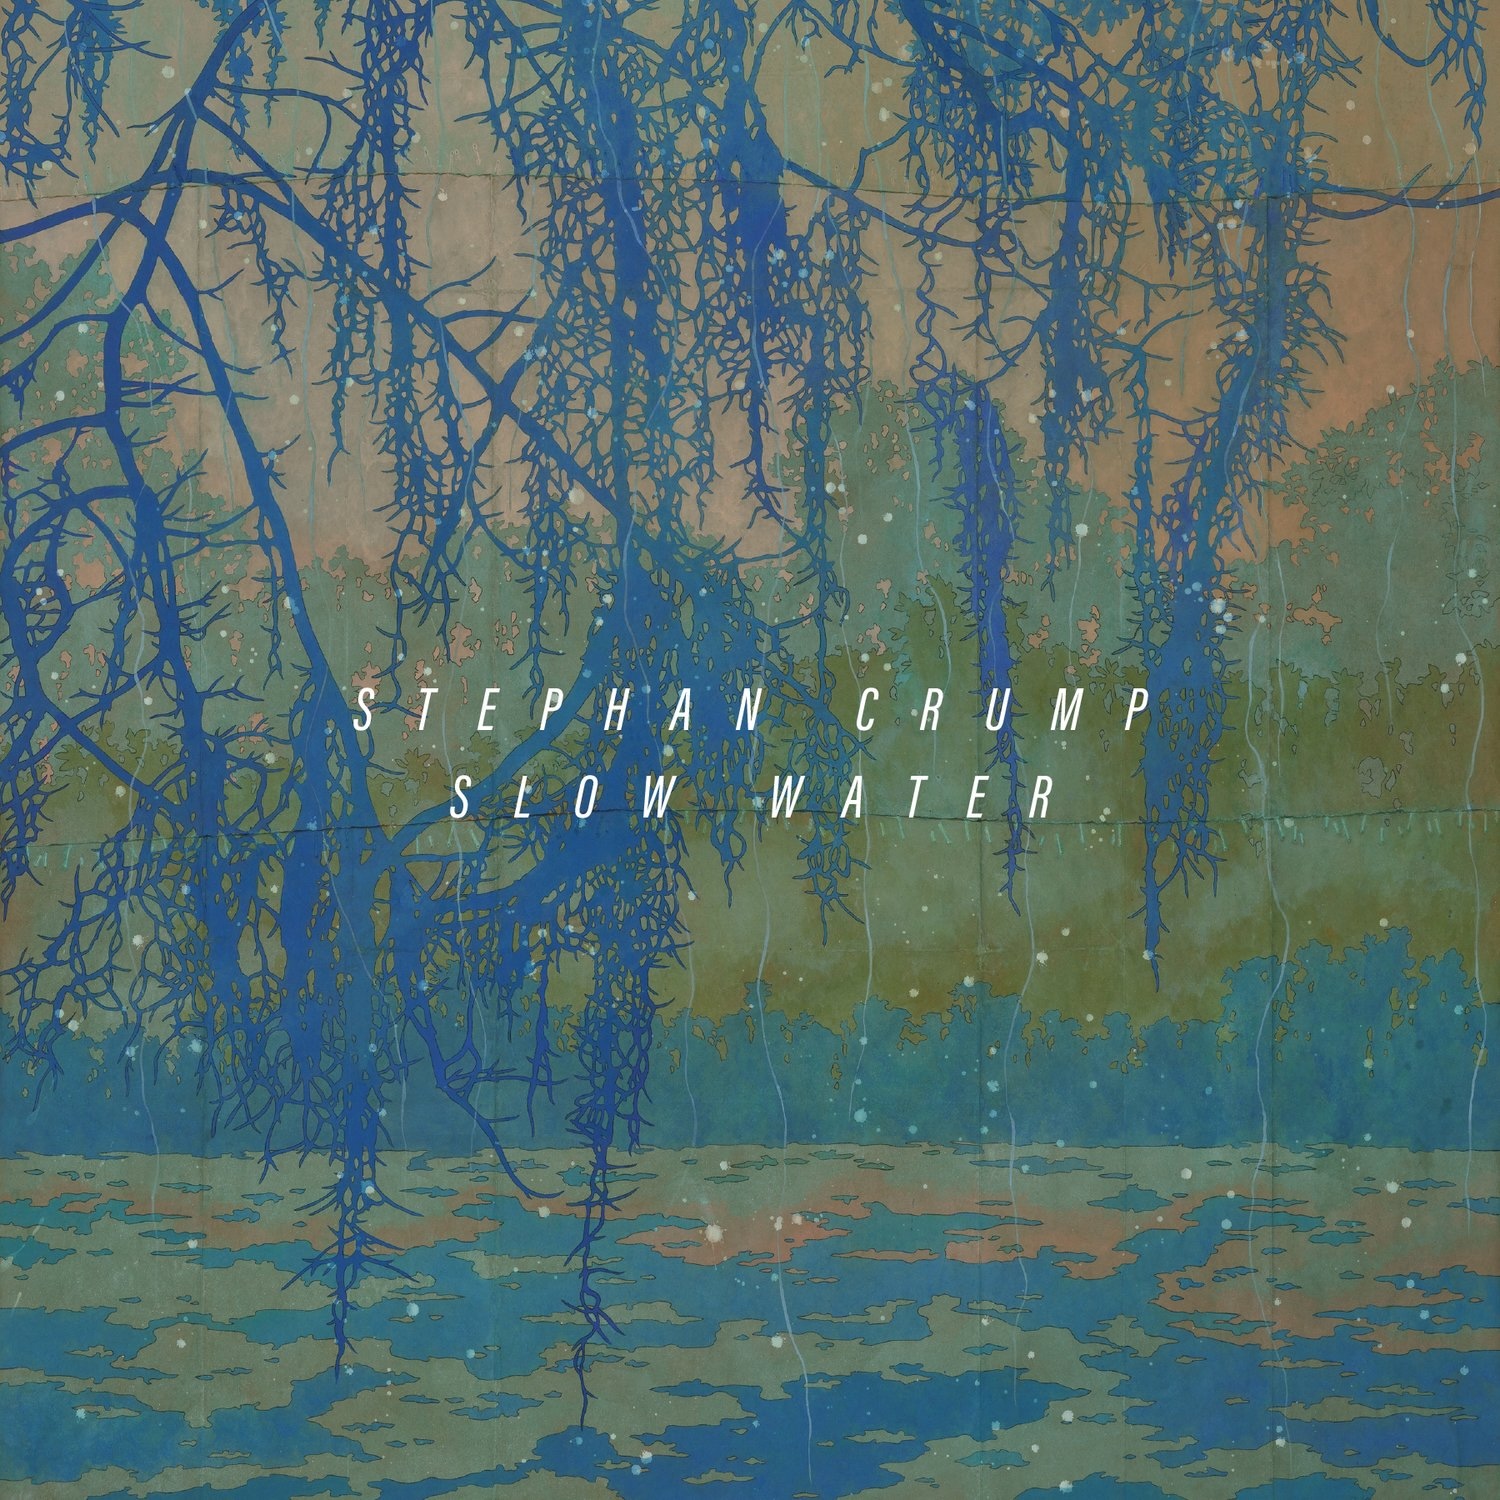 Stephan Crump "Slow Water"